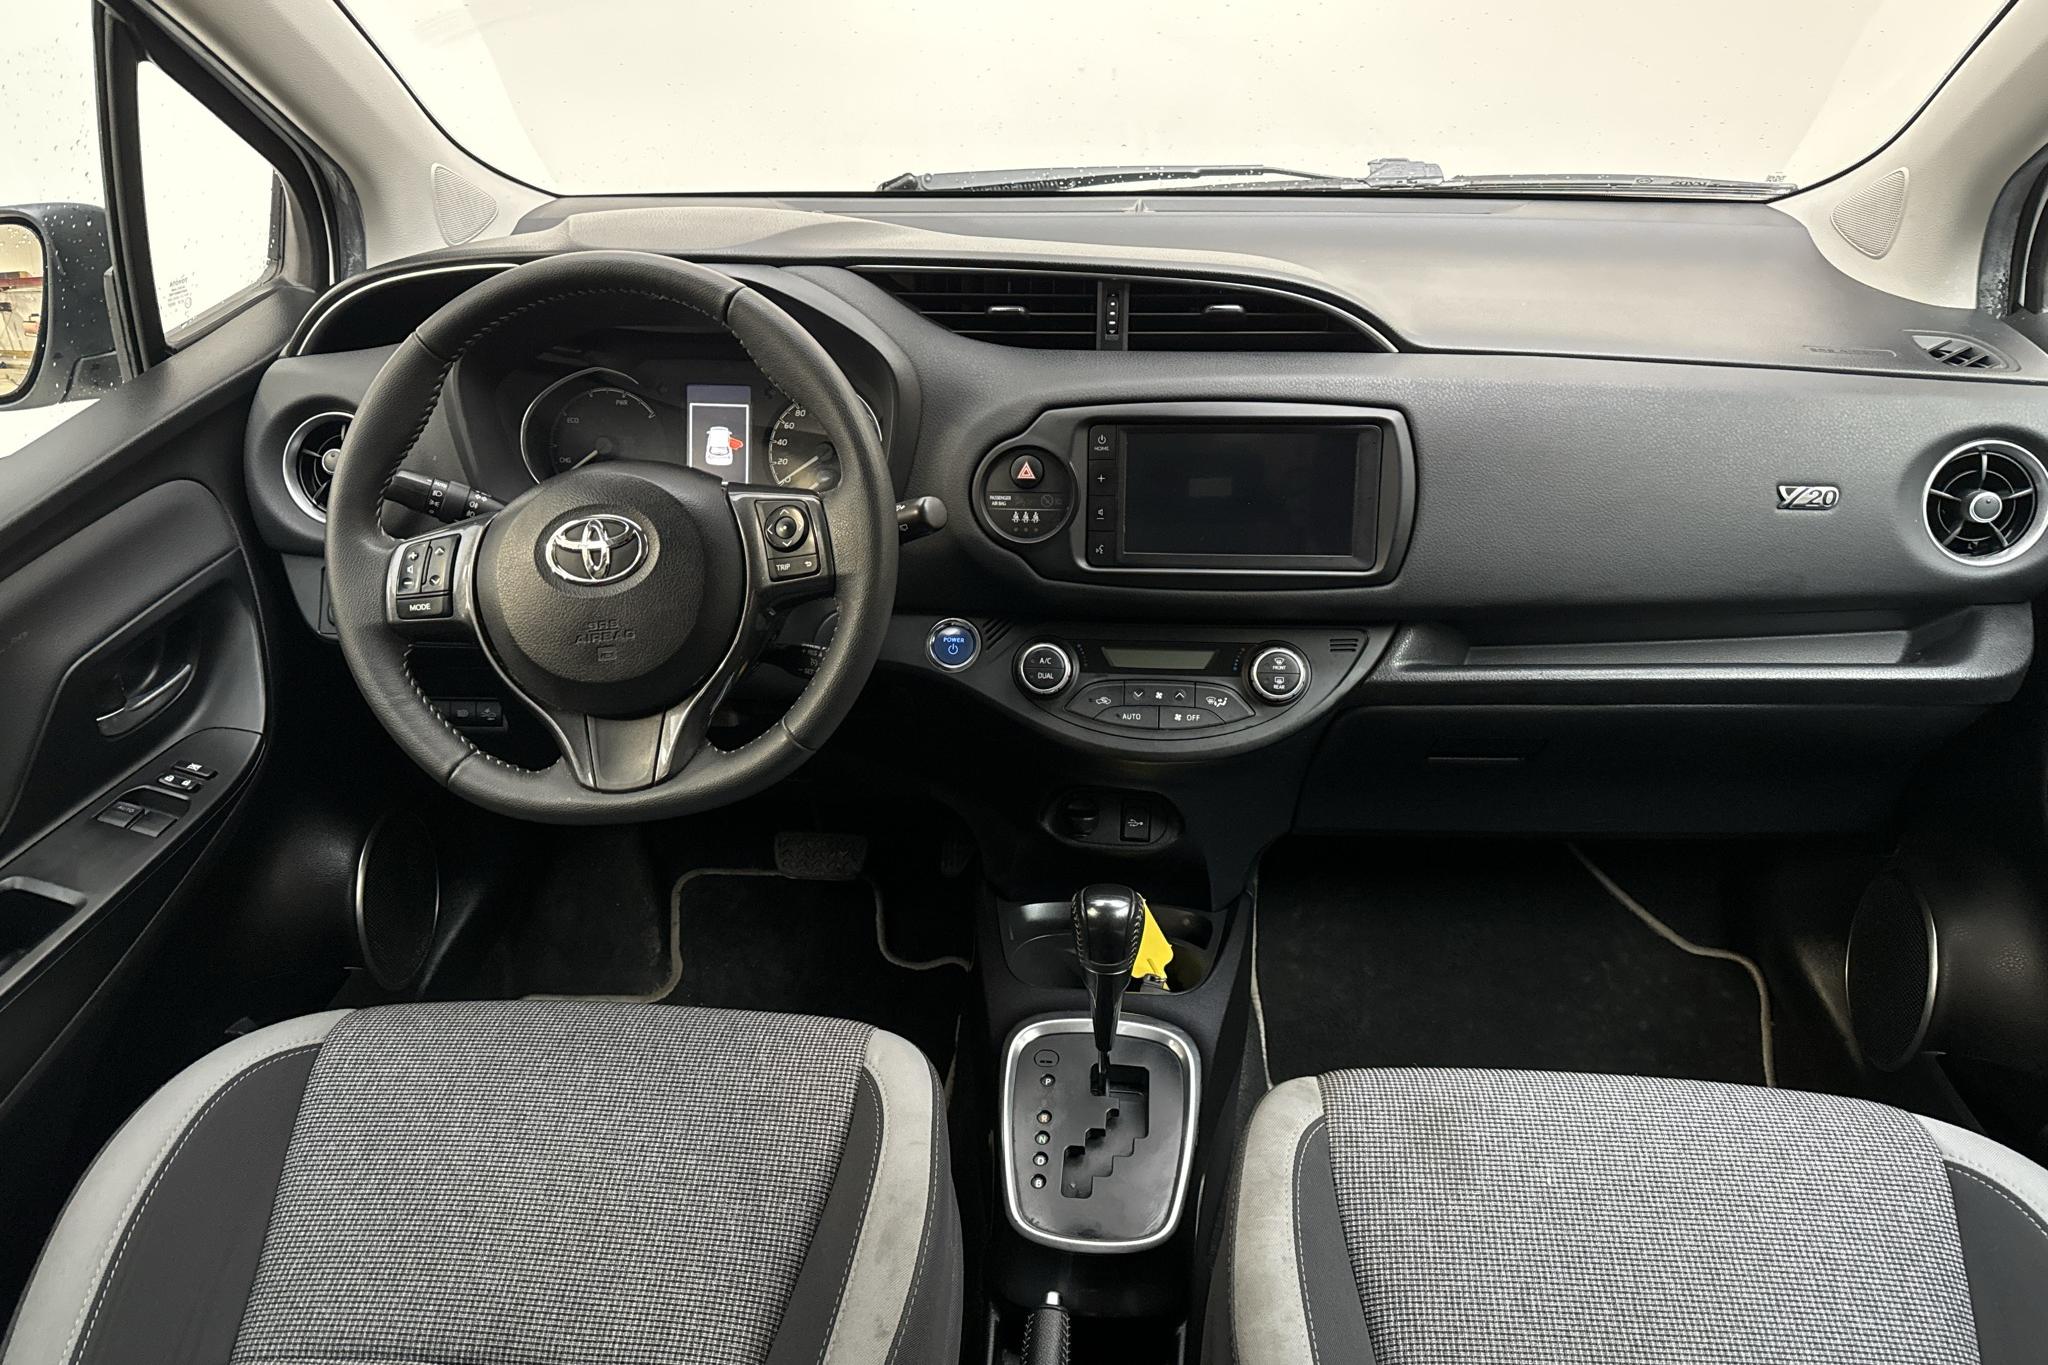 Toyota Yaris 1.5 Hybrid 5dr (101hk) - 124 800 km - Automatic - white - 2019